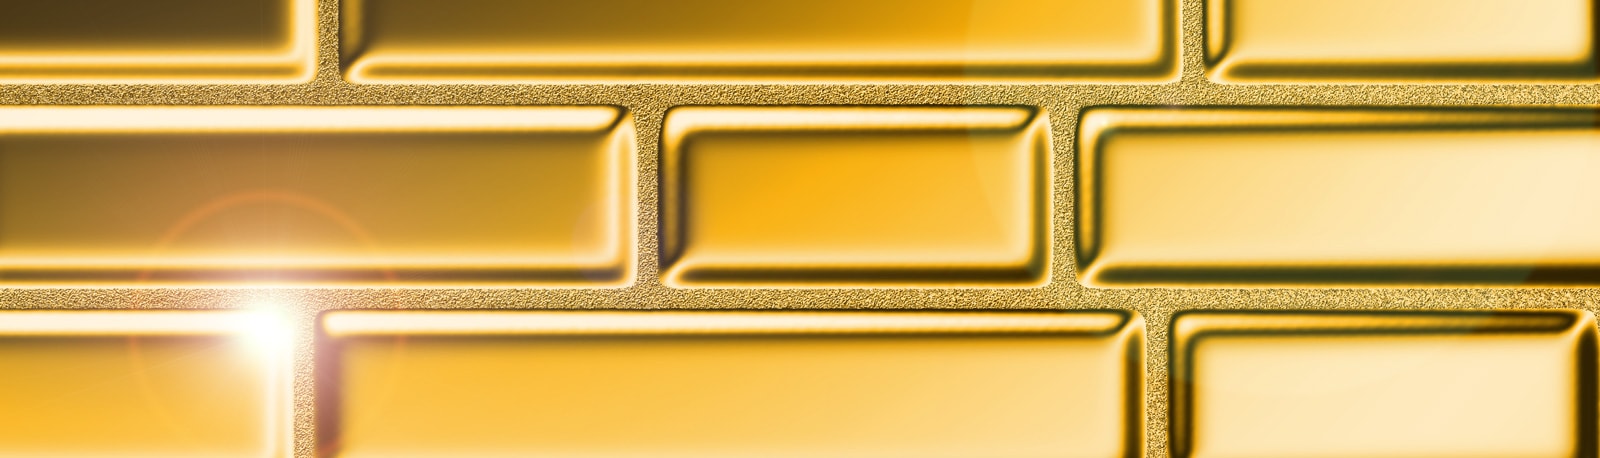 Mur af guld